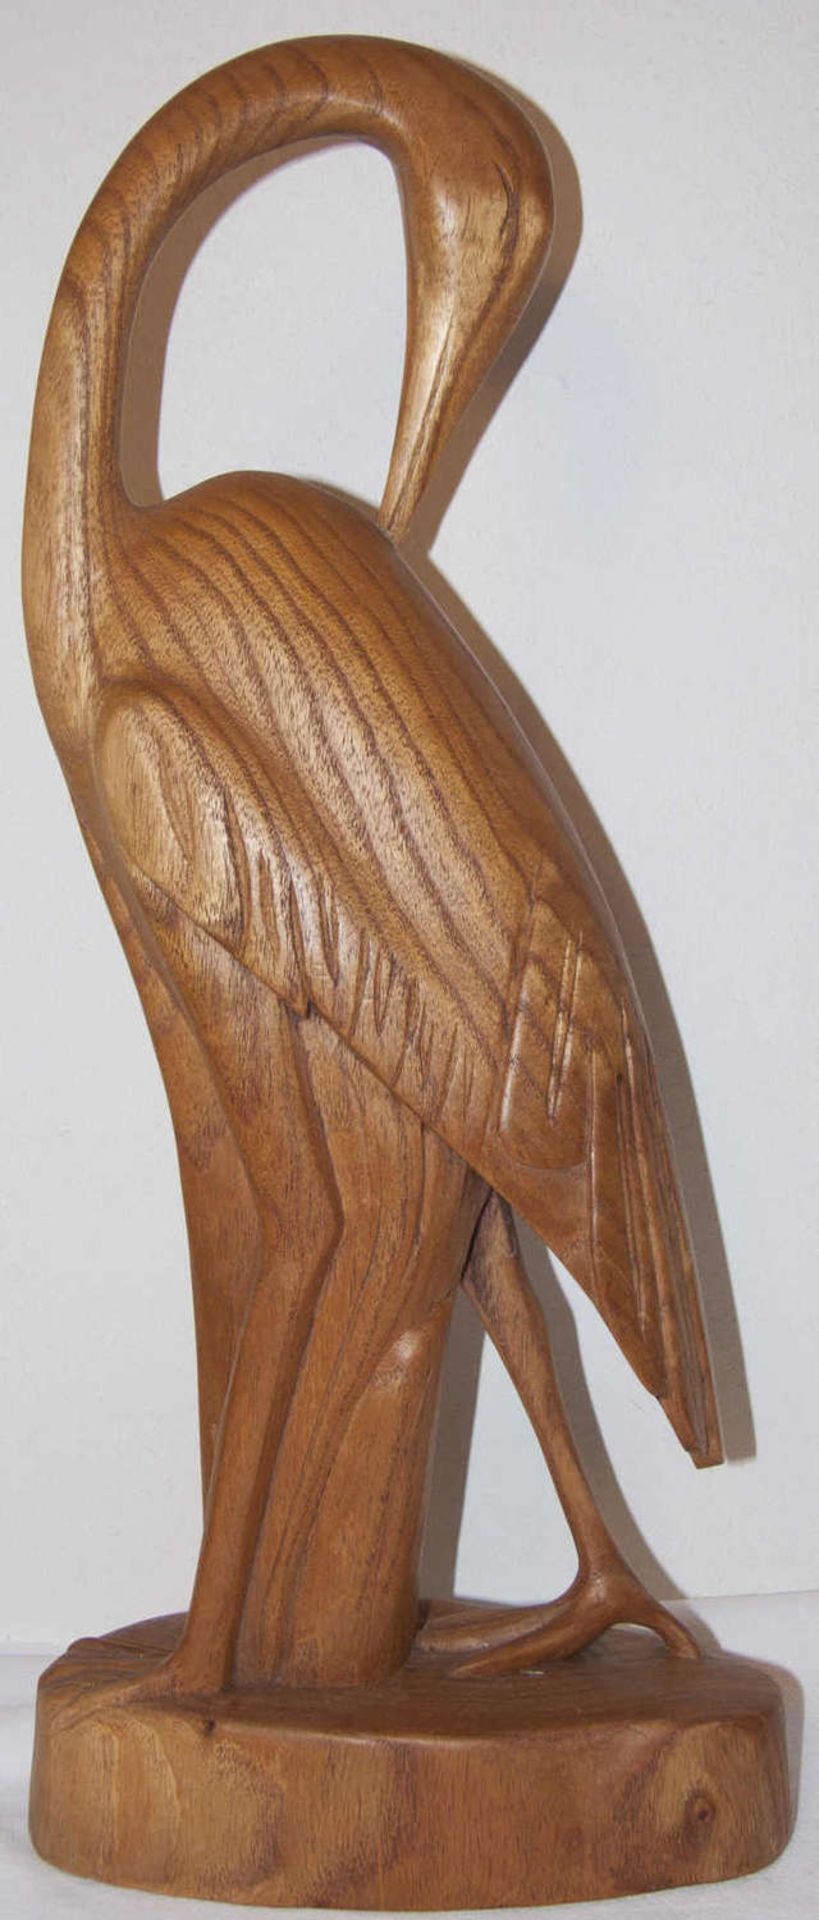 Holz - Skulptur "Fisch - Reiher". Massiv - Holz. Höhe: ca. 59 cm. Guter Zustand.Wood sculpture "Fish